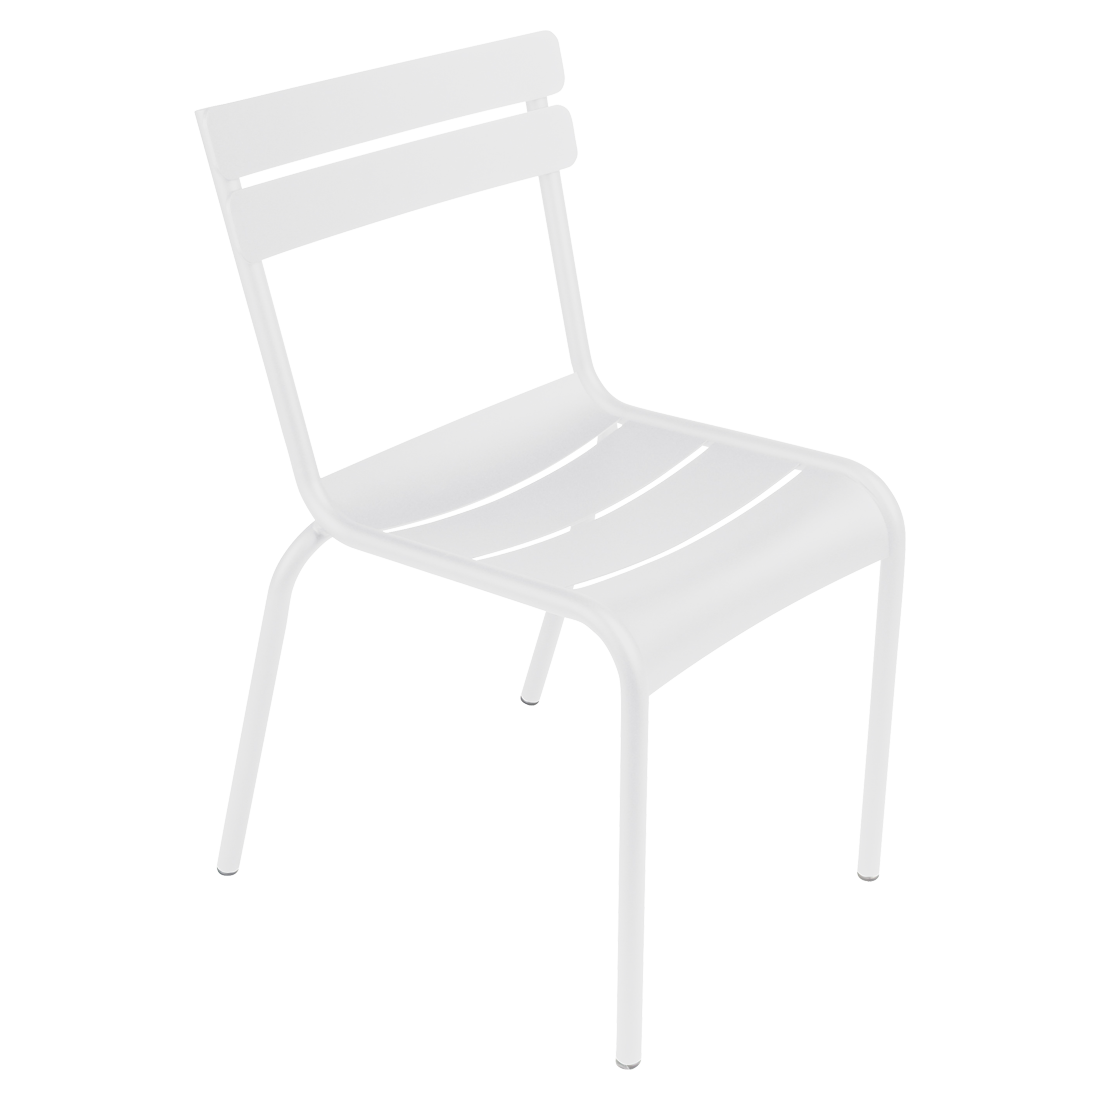 chaise de jardin, chaise metal, chaise fermob, chaise terrasse, chaise blanche